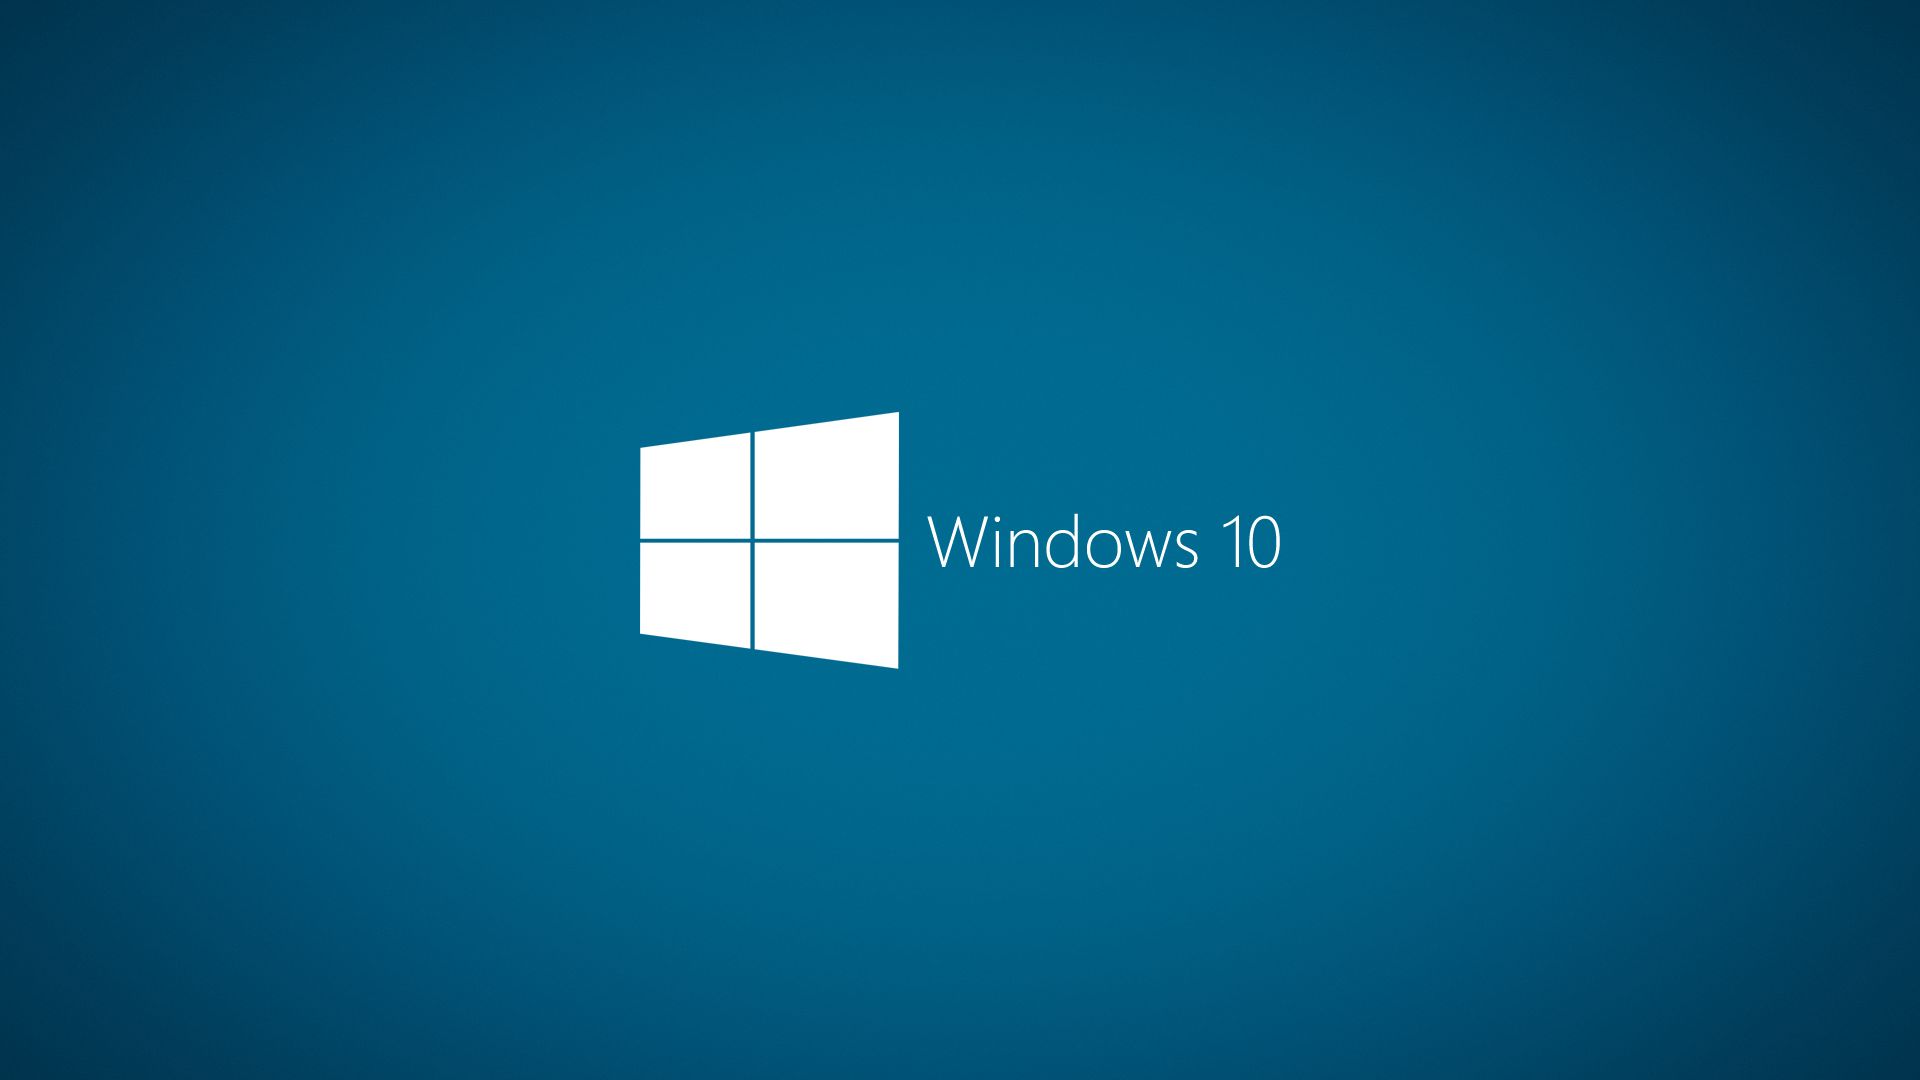 microsoft, windows, windows 10, technology